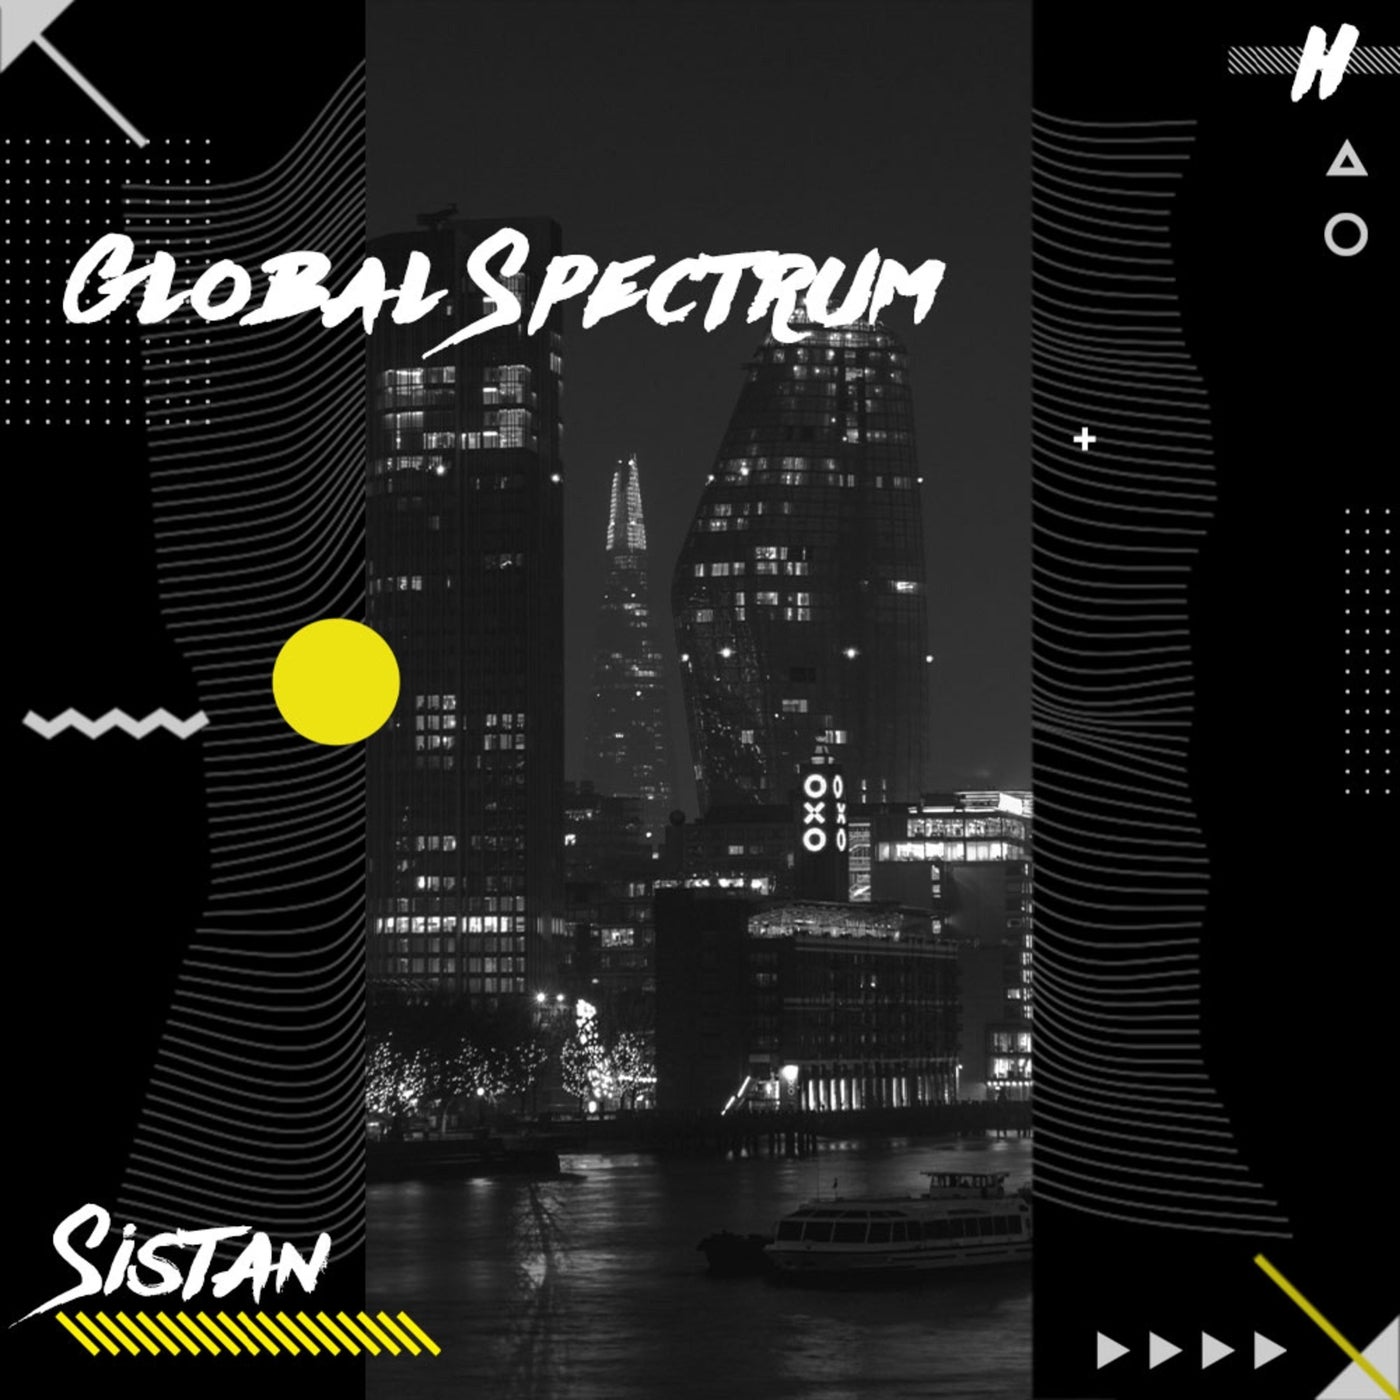 Global Spectrum